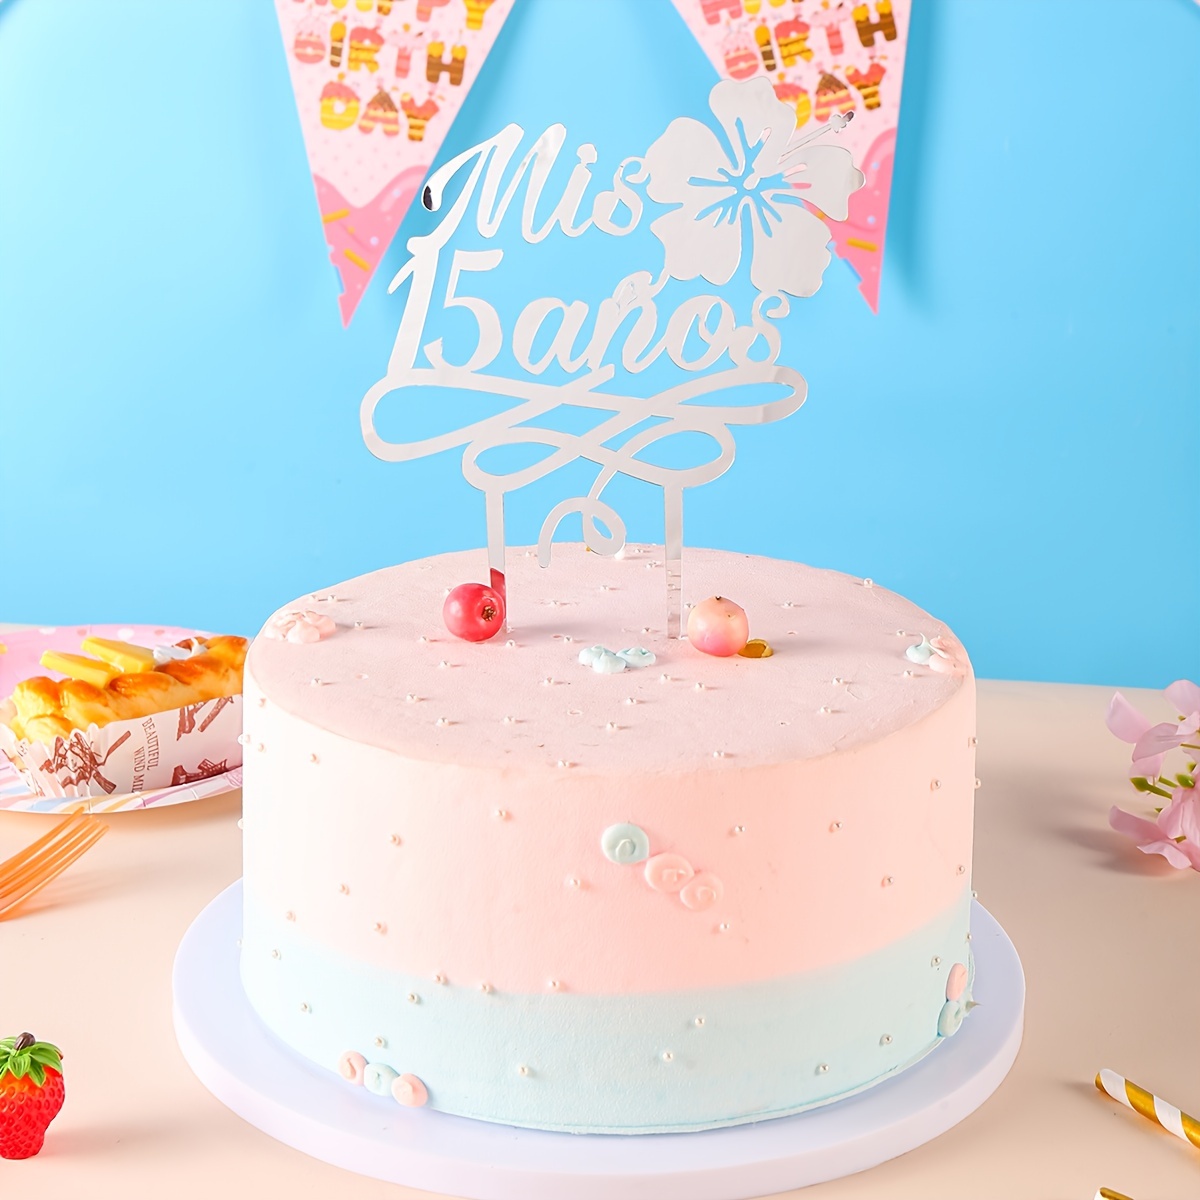 We still DO | Wedding anniversary cakes, Anniversary cake designs, Anniversary  cake